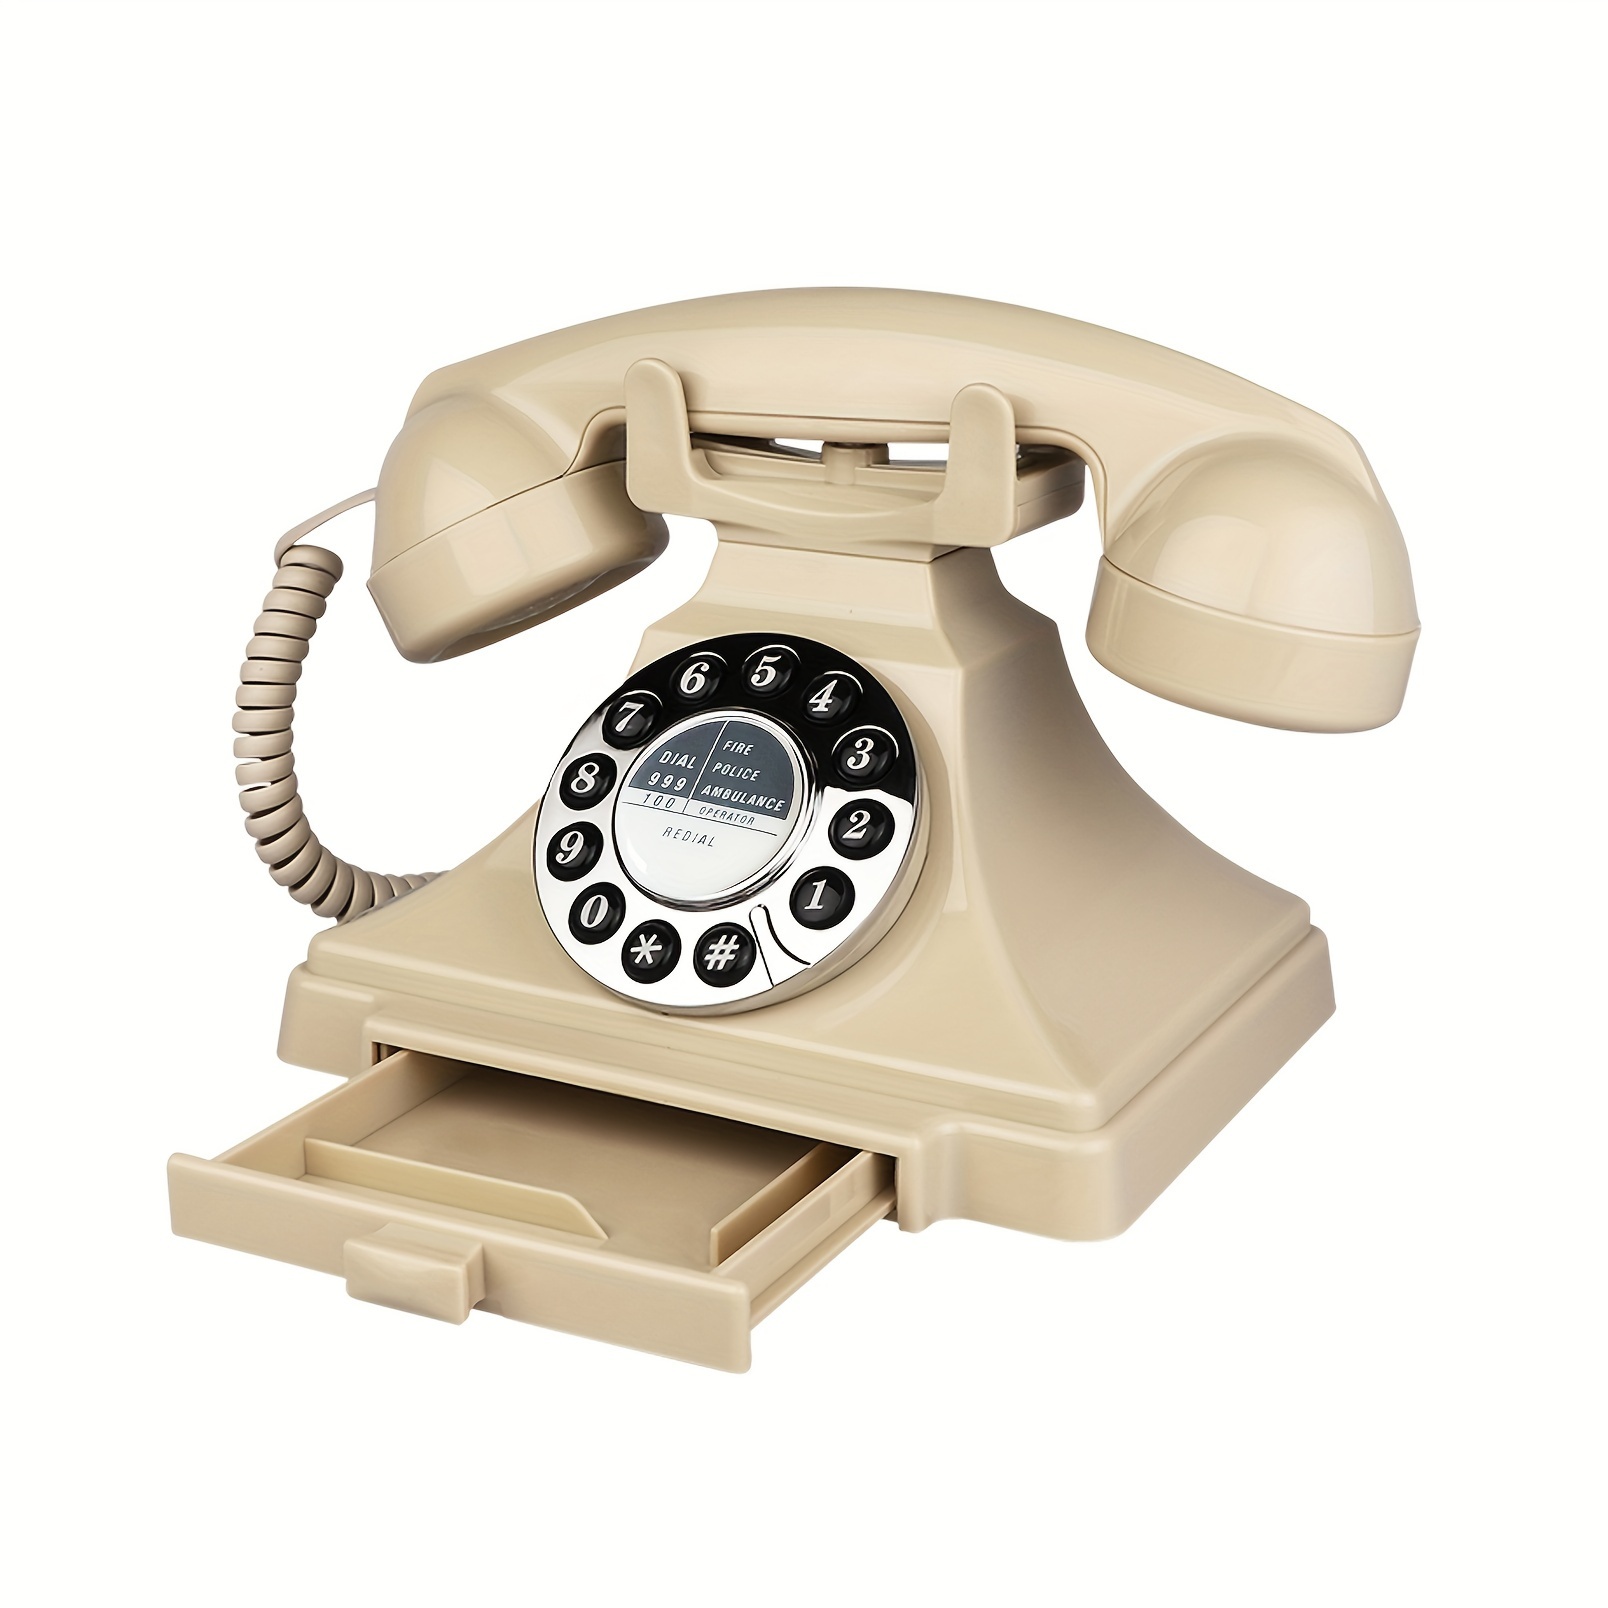 Vintage Style Corded Phone Landline Phone Retro Old Fashioned